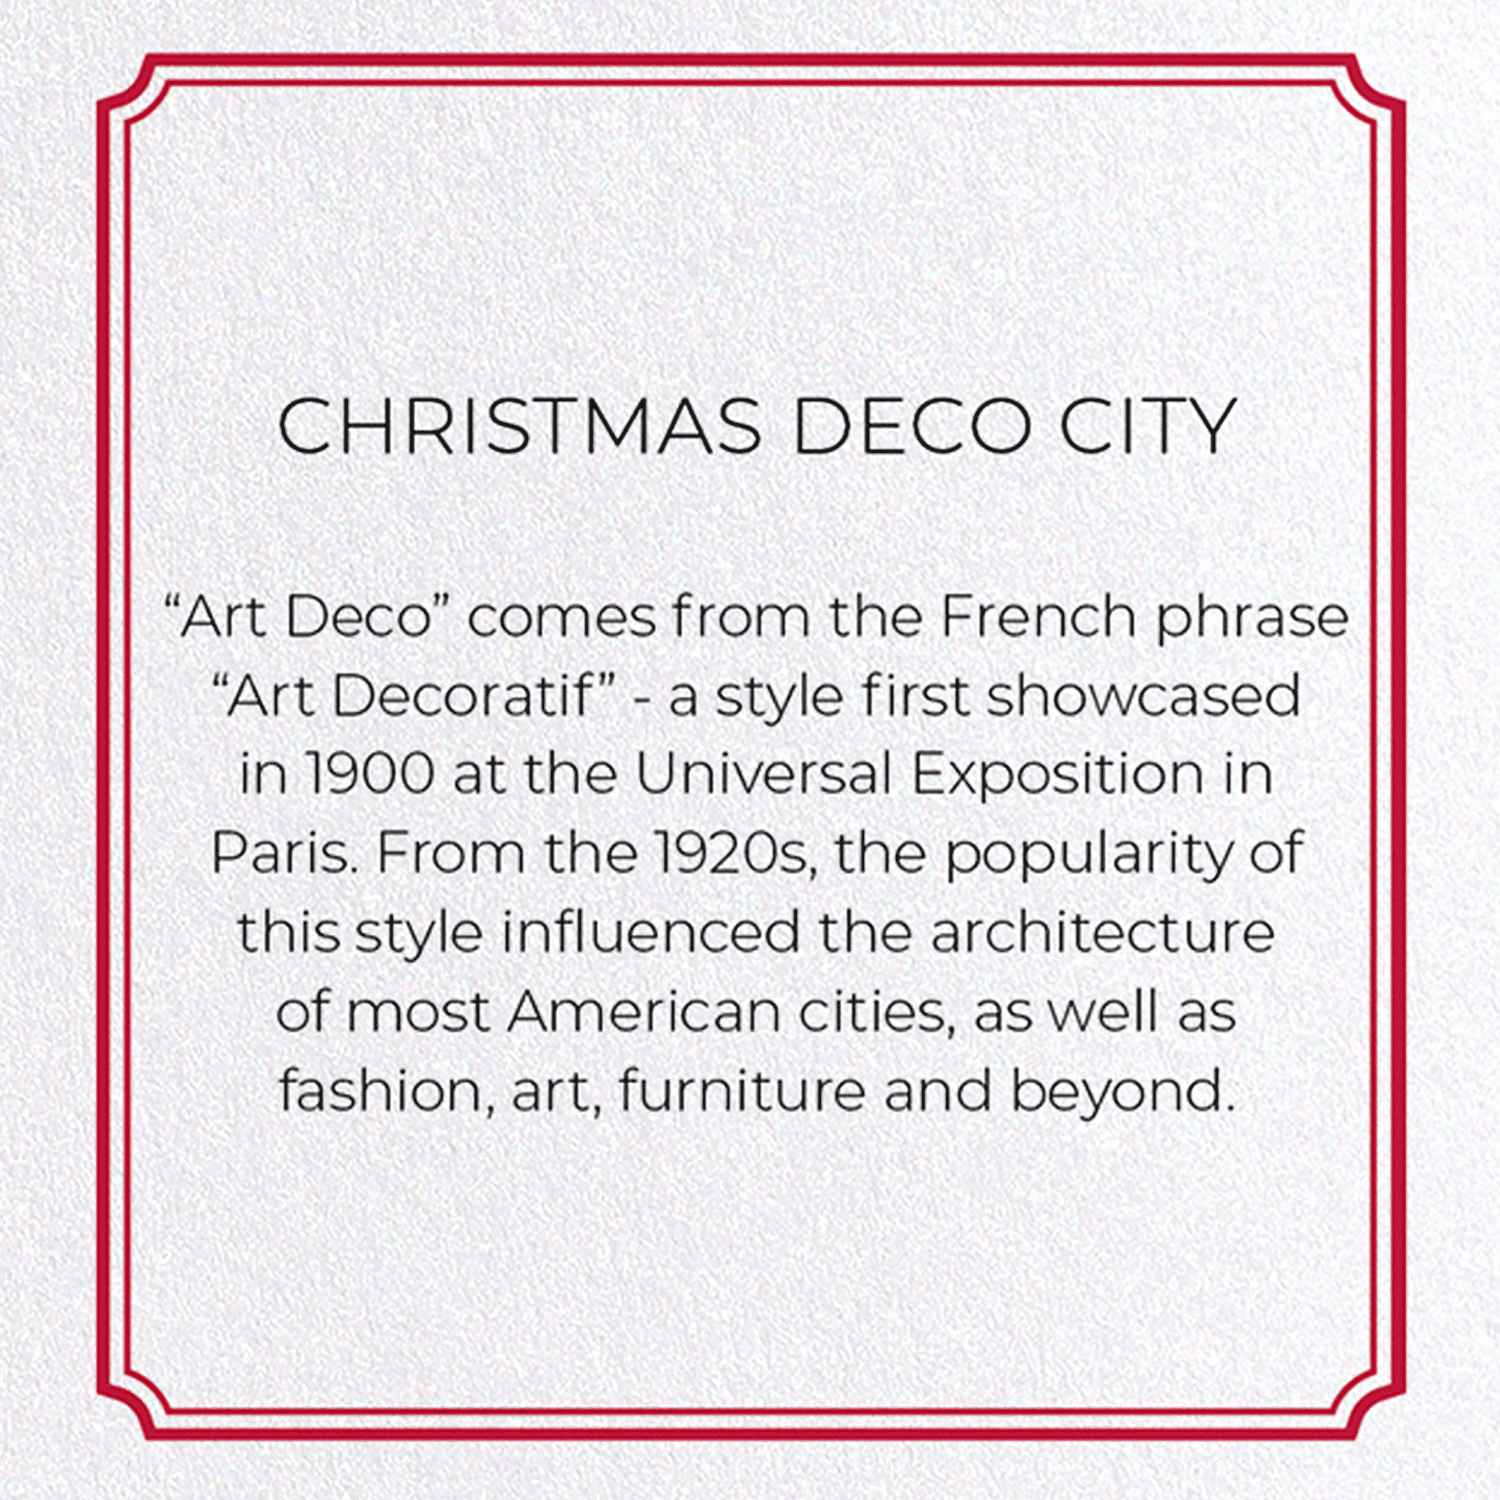 CHRISTMAS DECO CITY: Modern deco Greeting Card